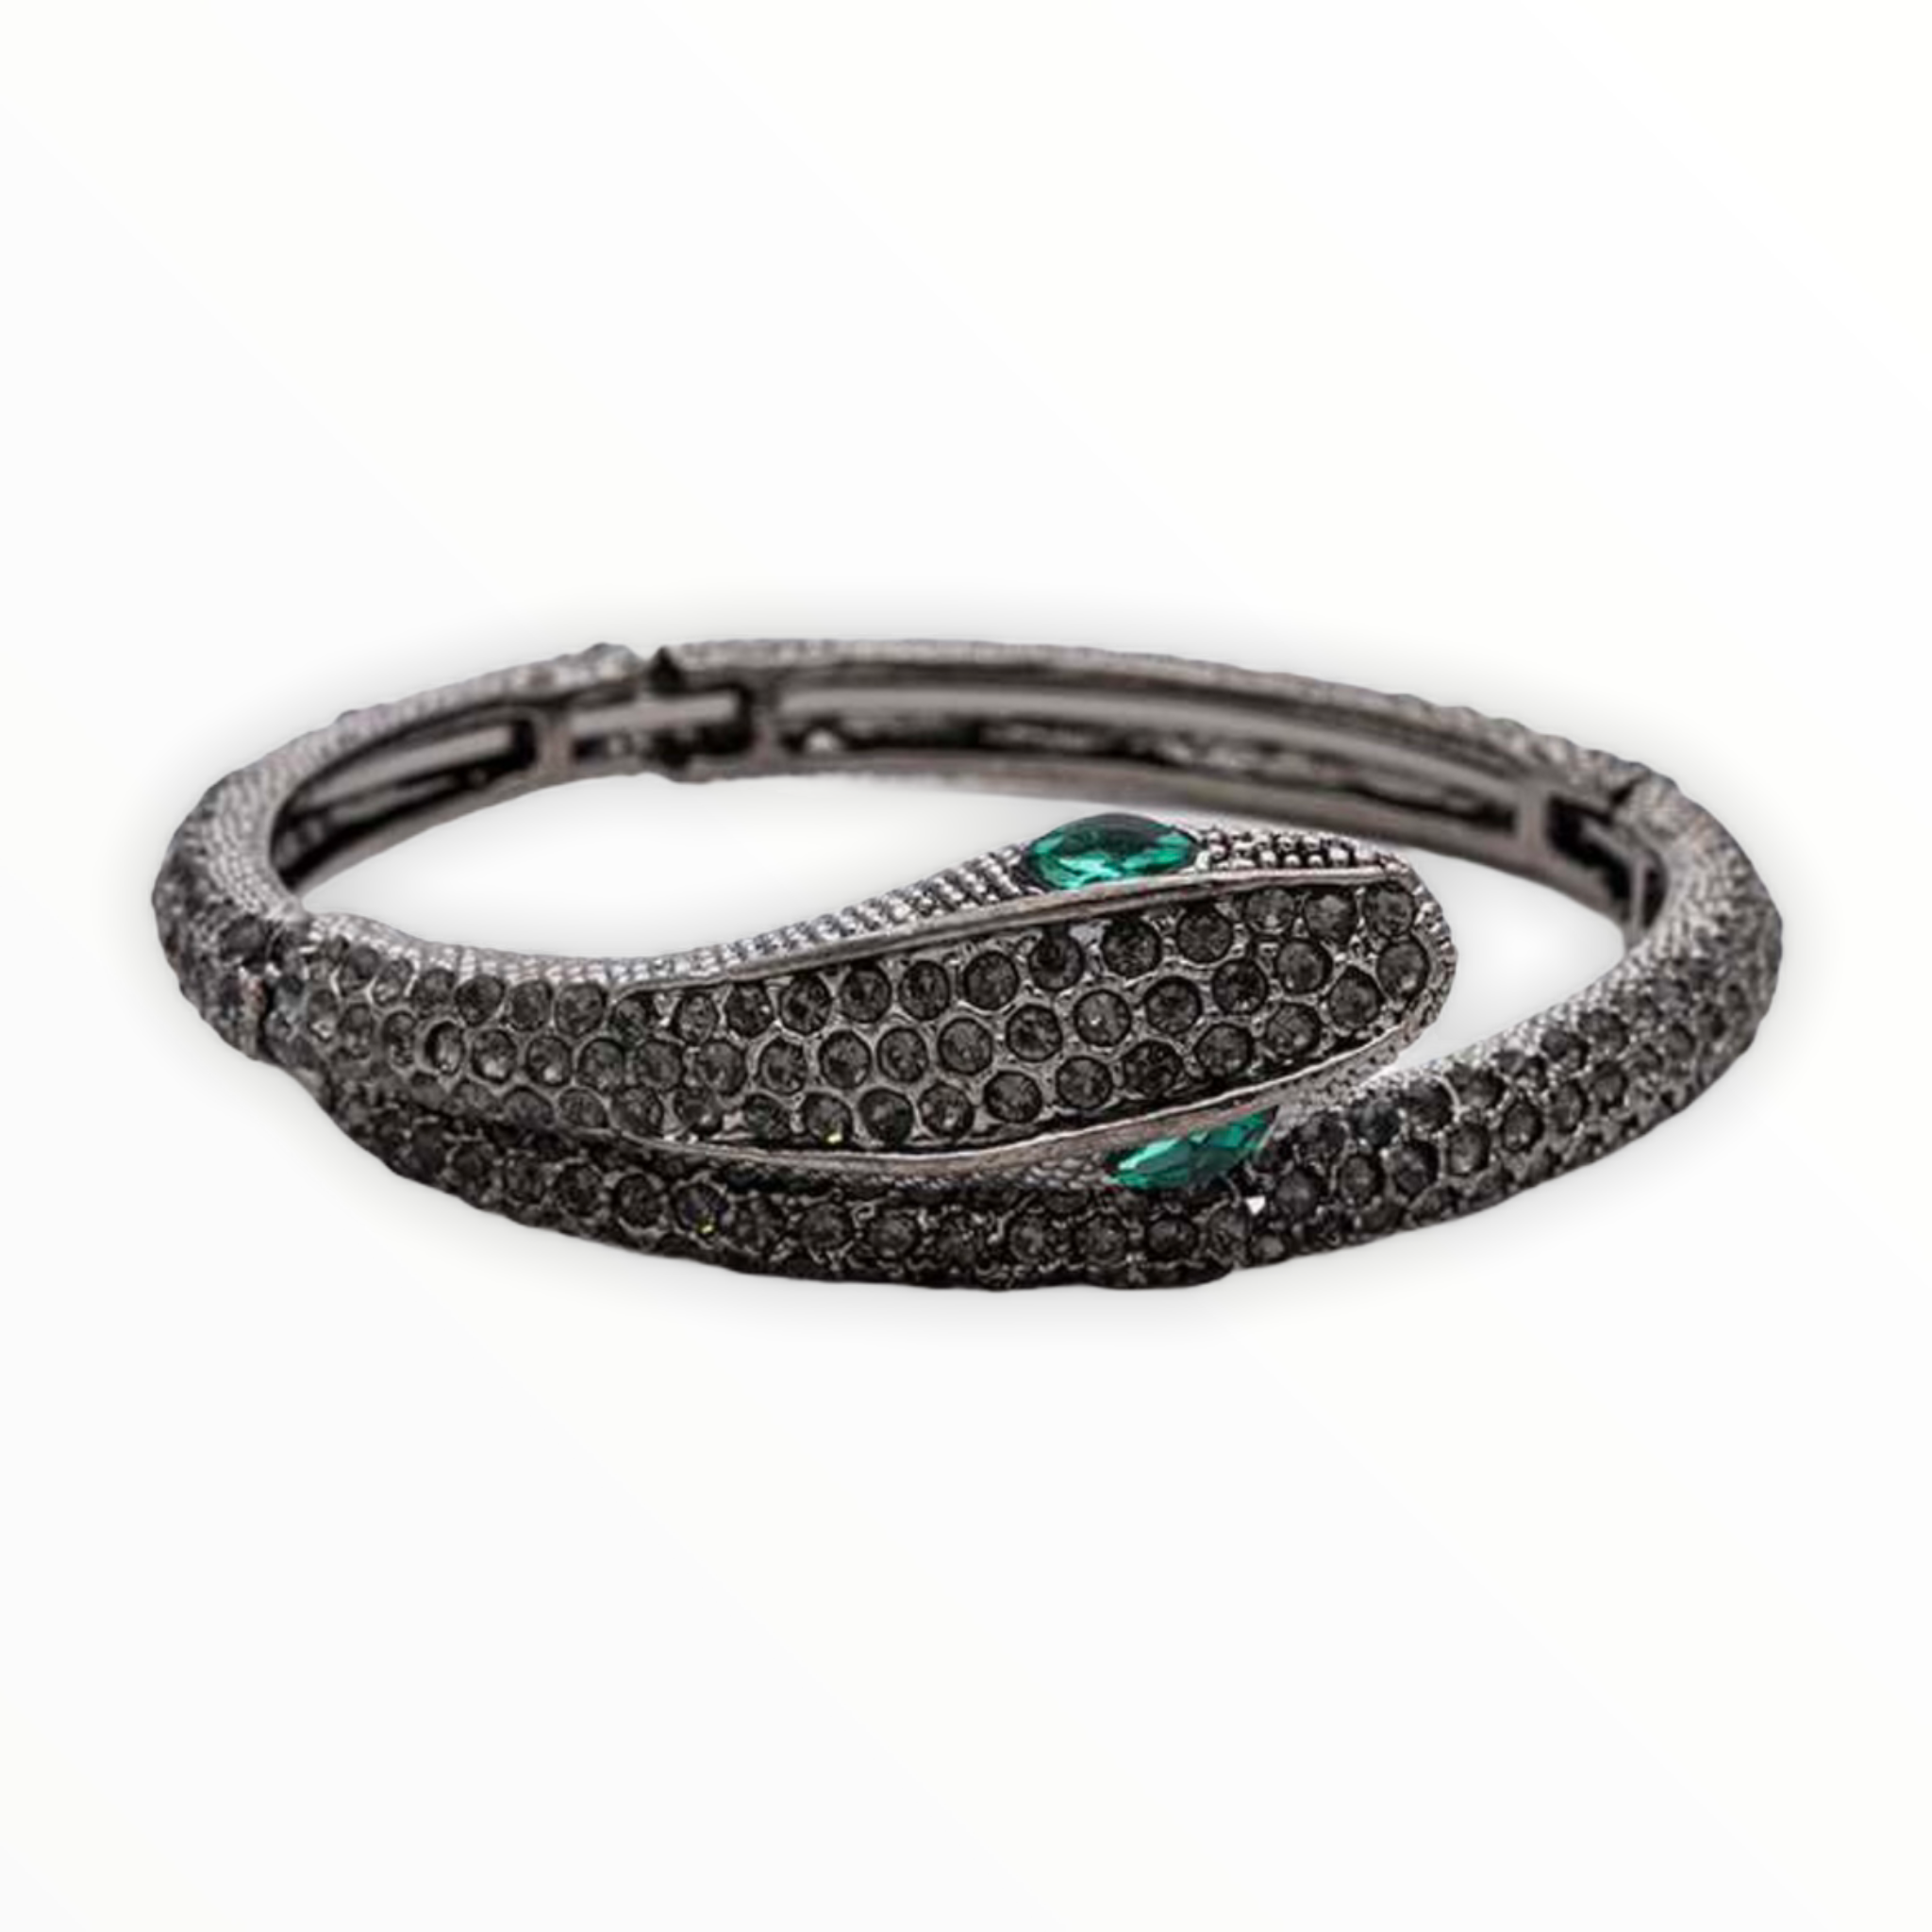 Crystal Snake Bracelet - Black